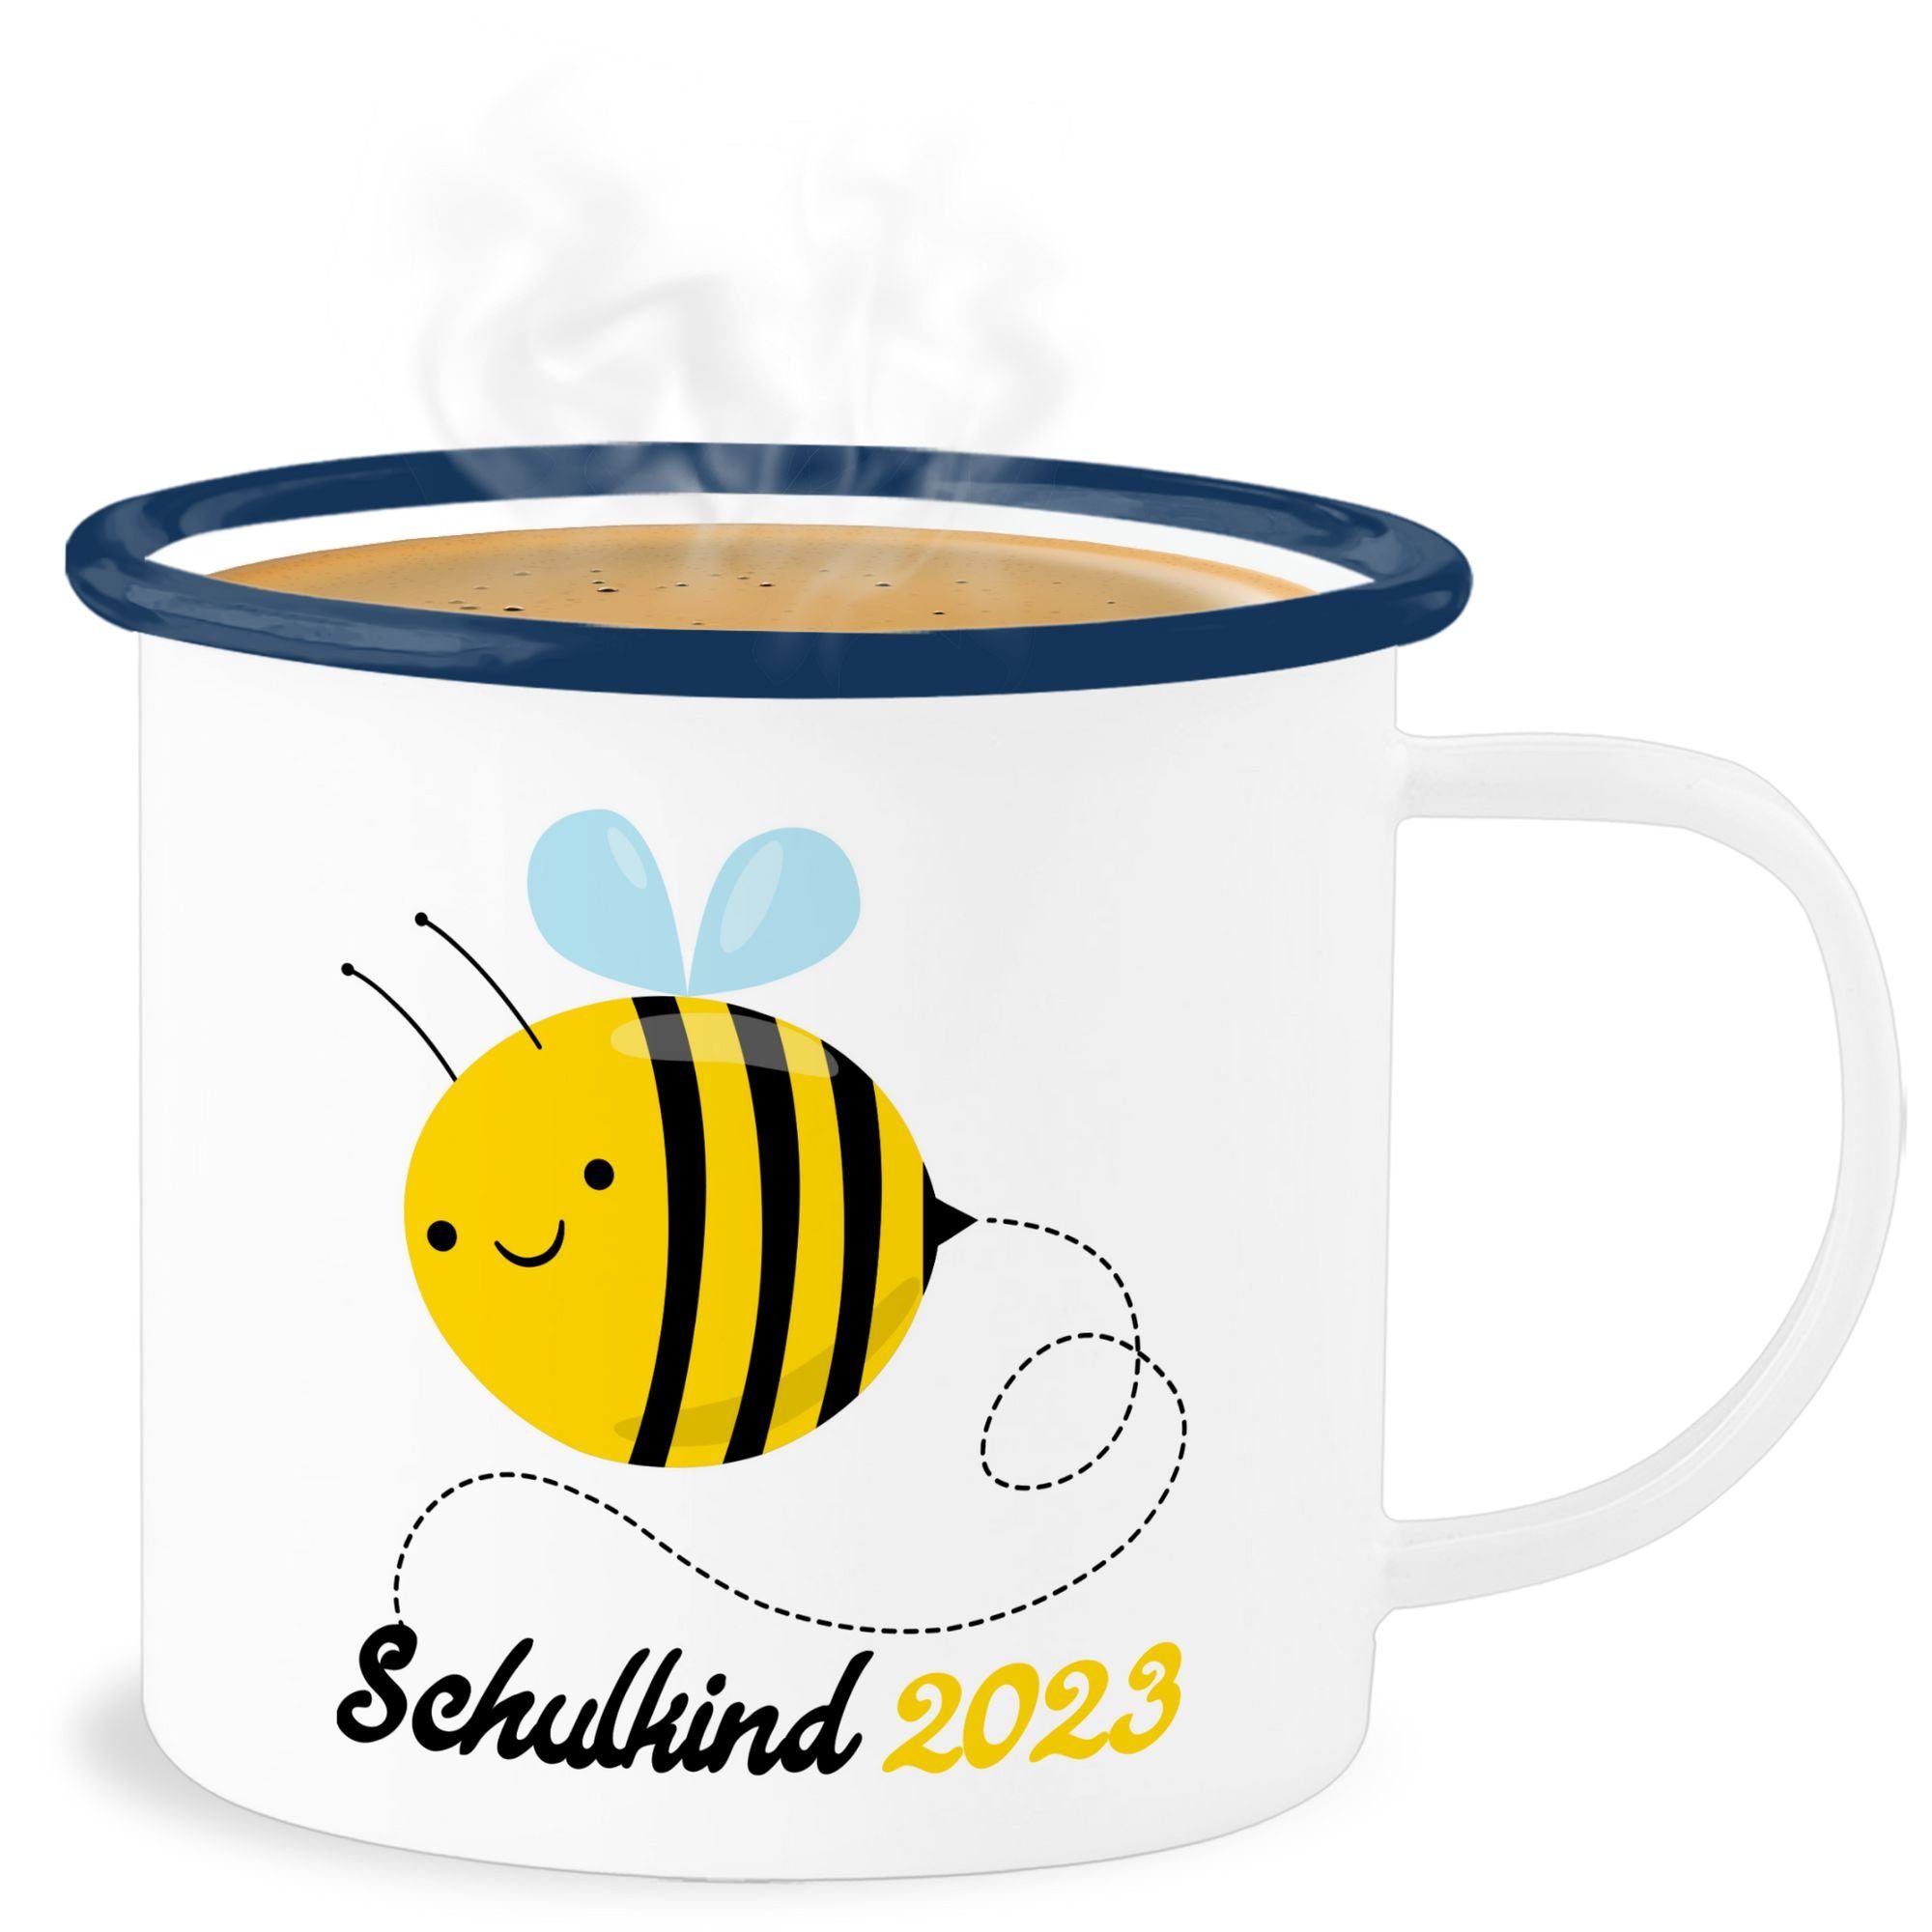 Shirtracer Becher Biene Schulkind 2023, Stahlblech, Einschulung Geschenk Tasse 3 Weiß Blau